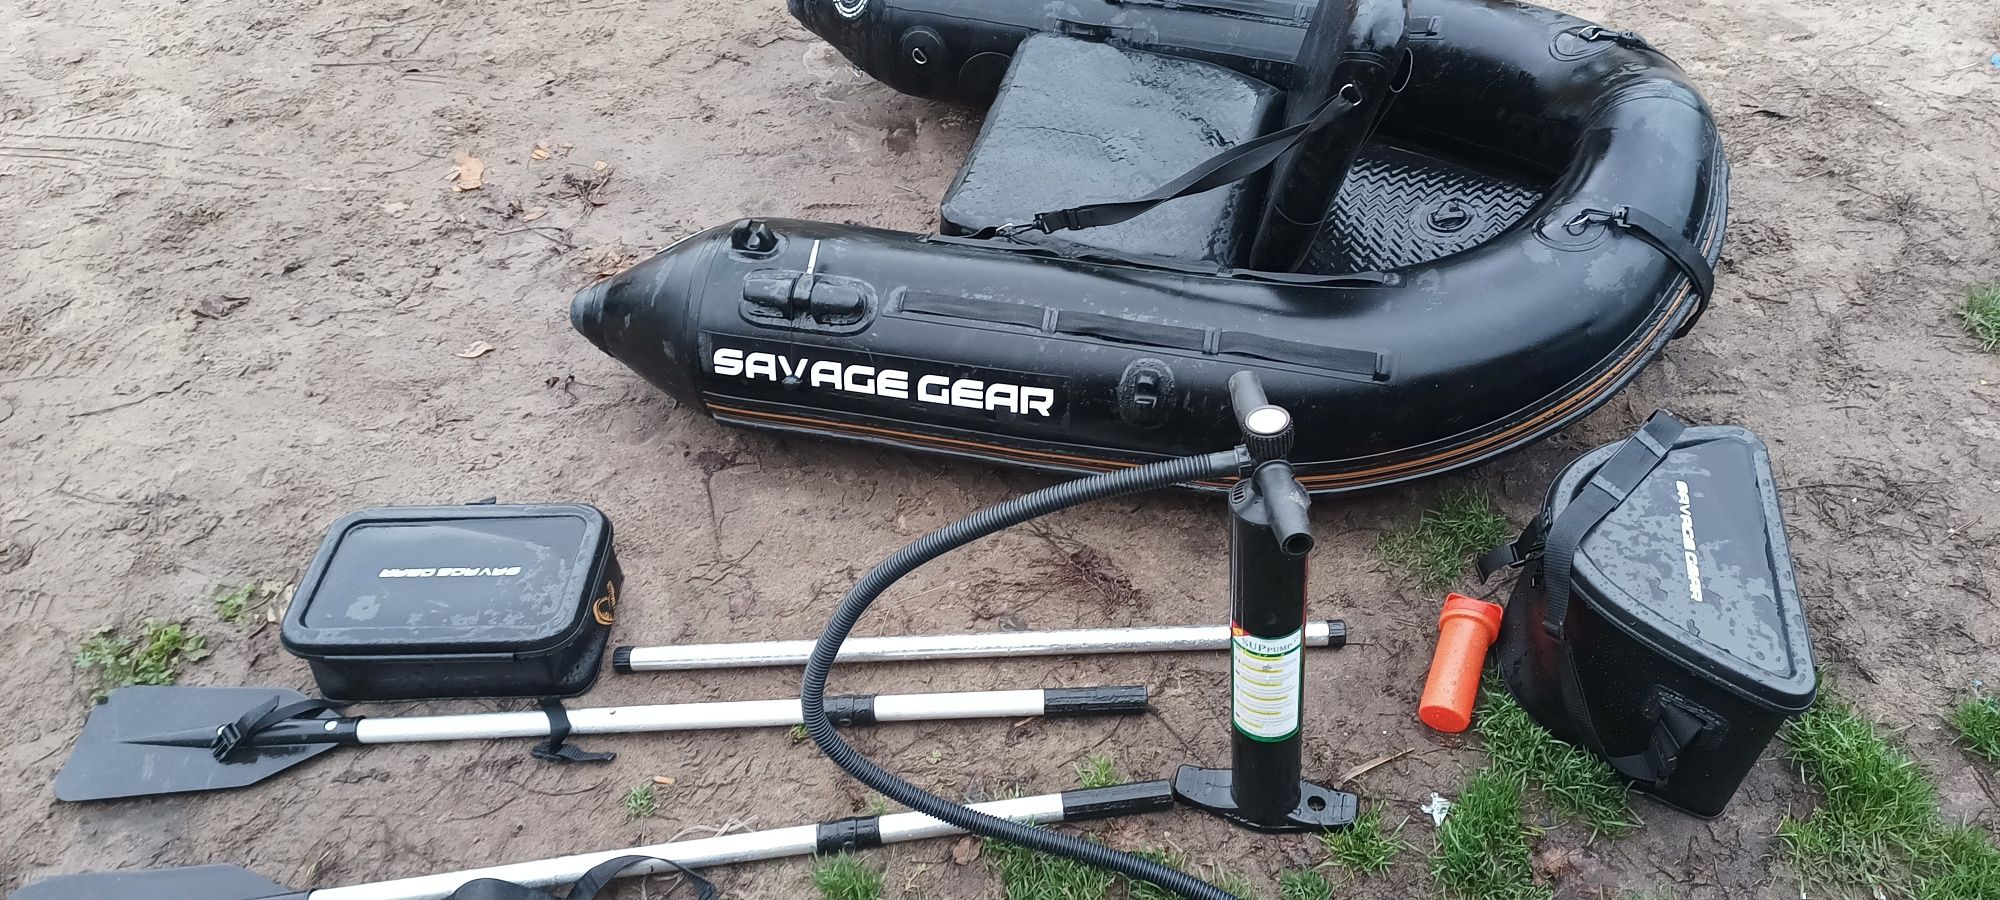 Pływadełko Savage Gear 170 v2